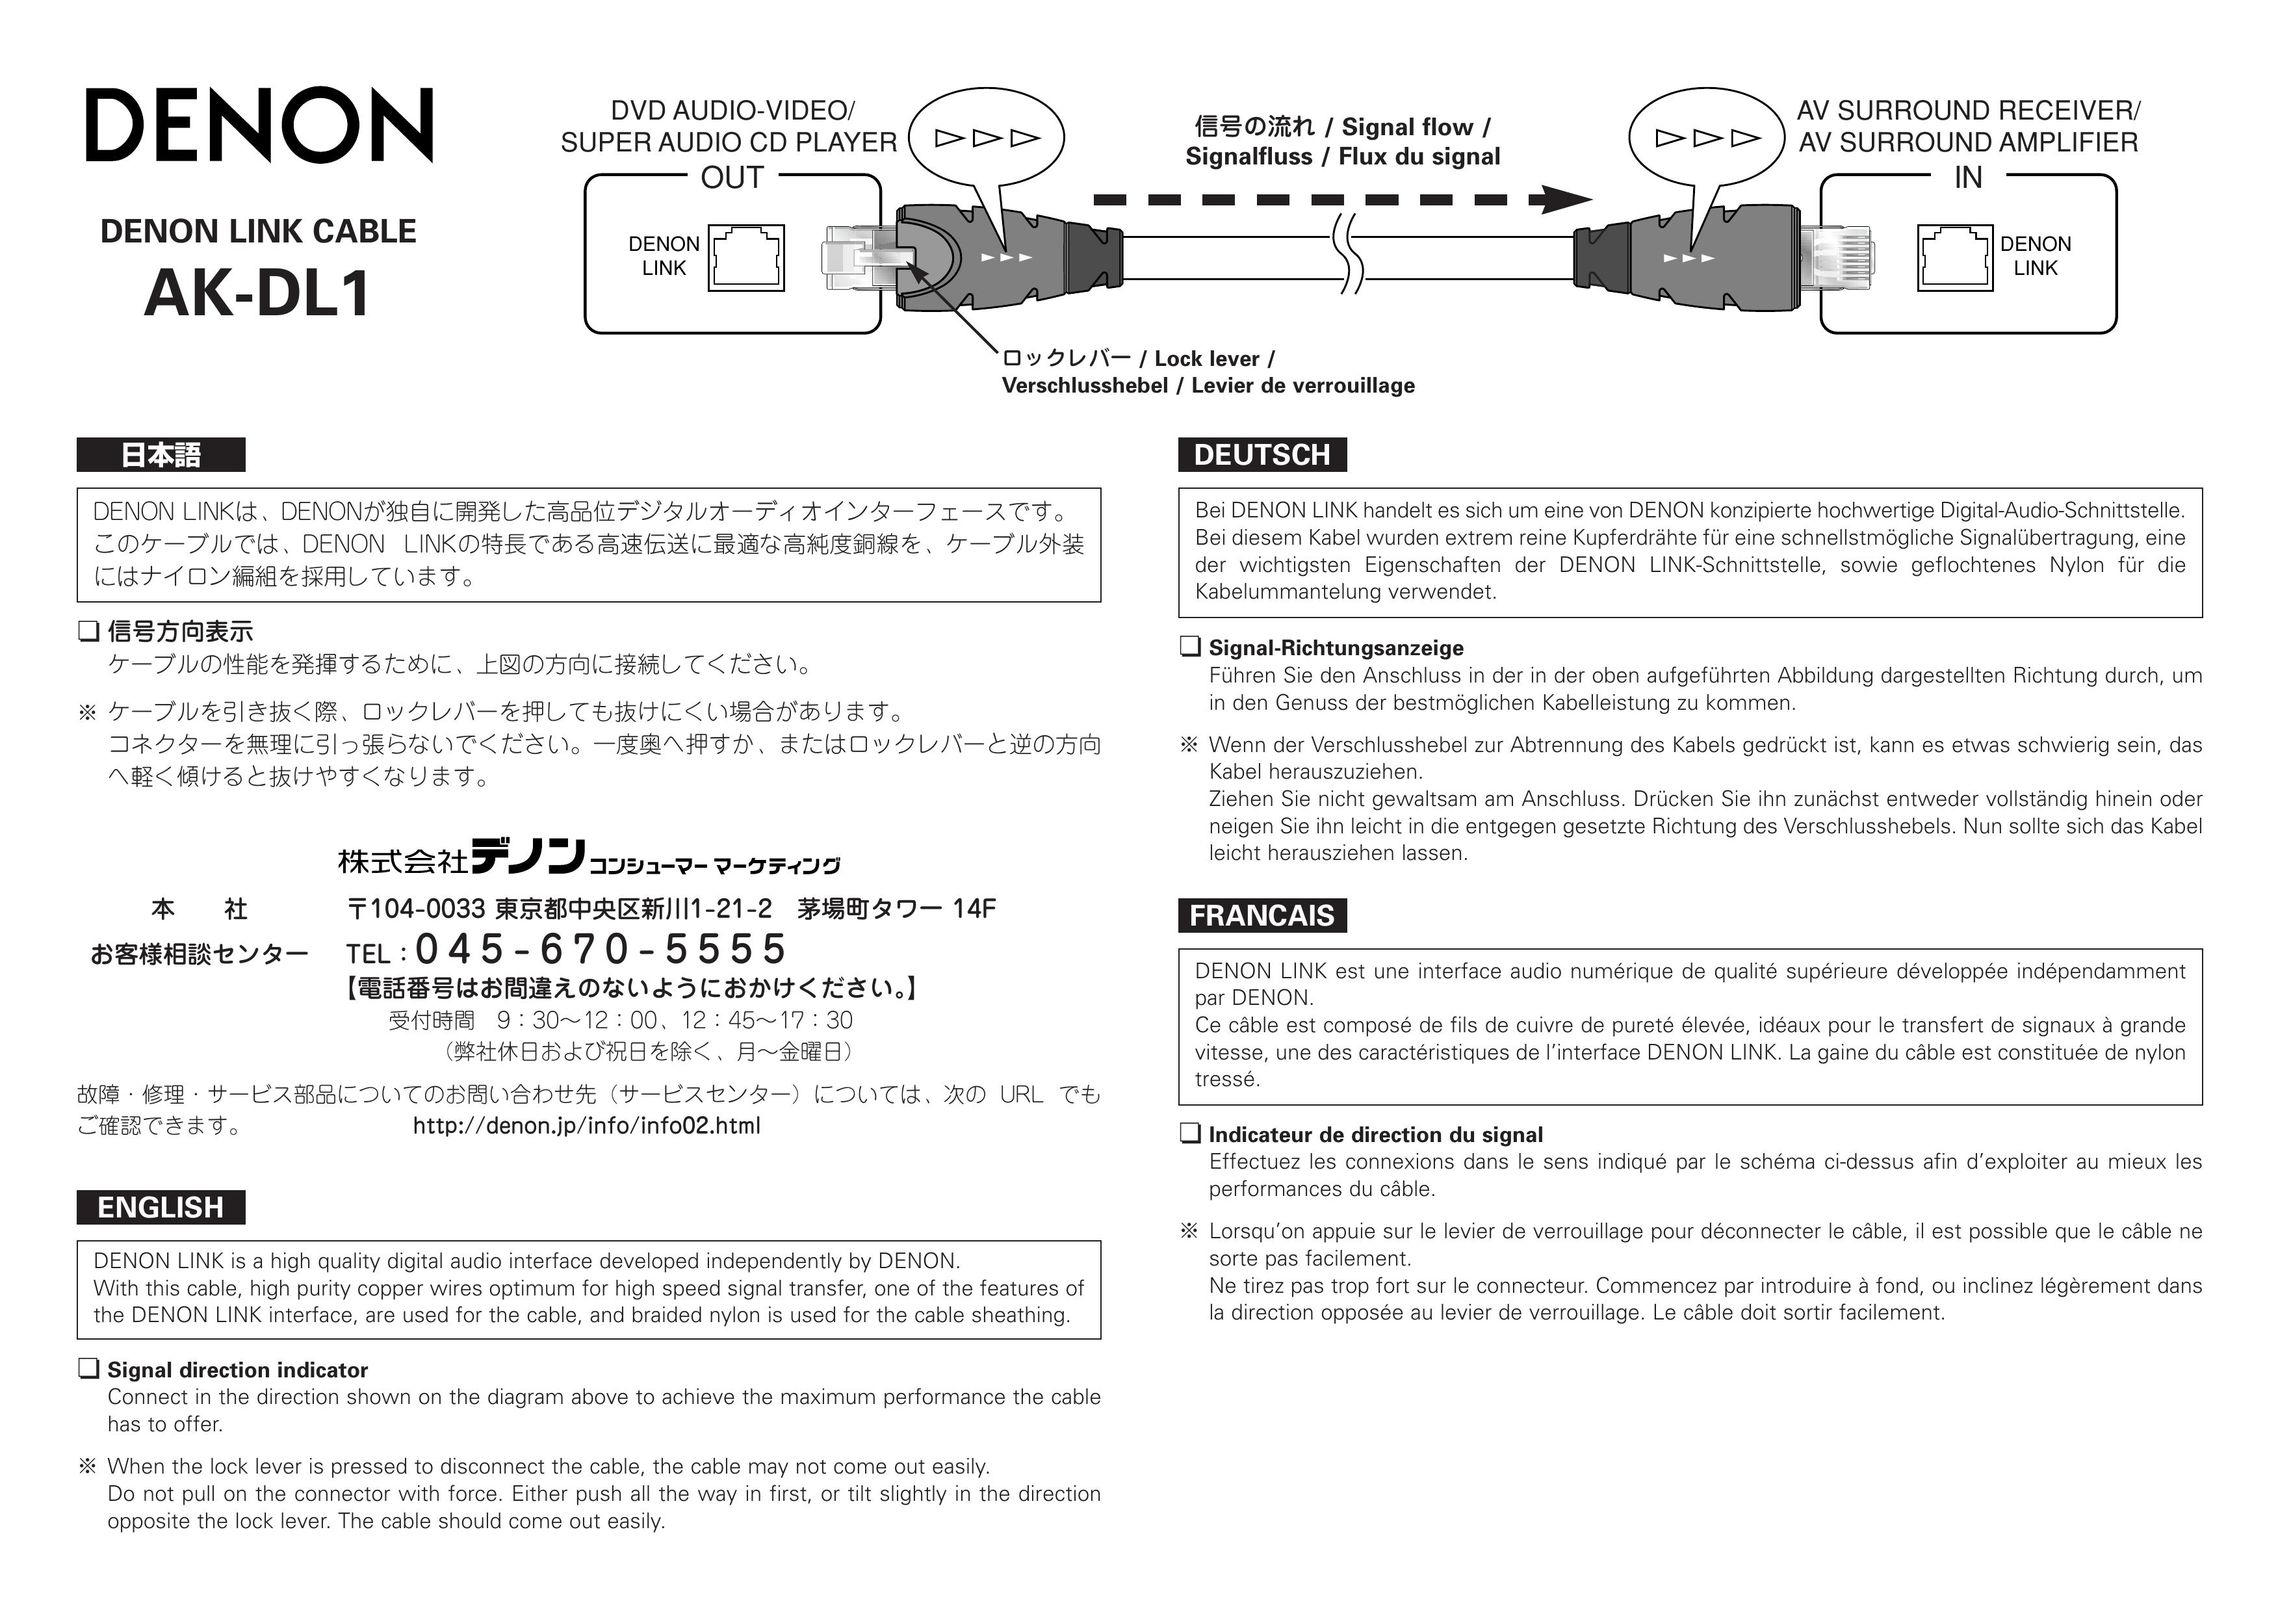 Denon AK-DL1 TV Cables User Manual